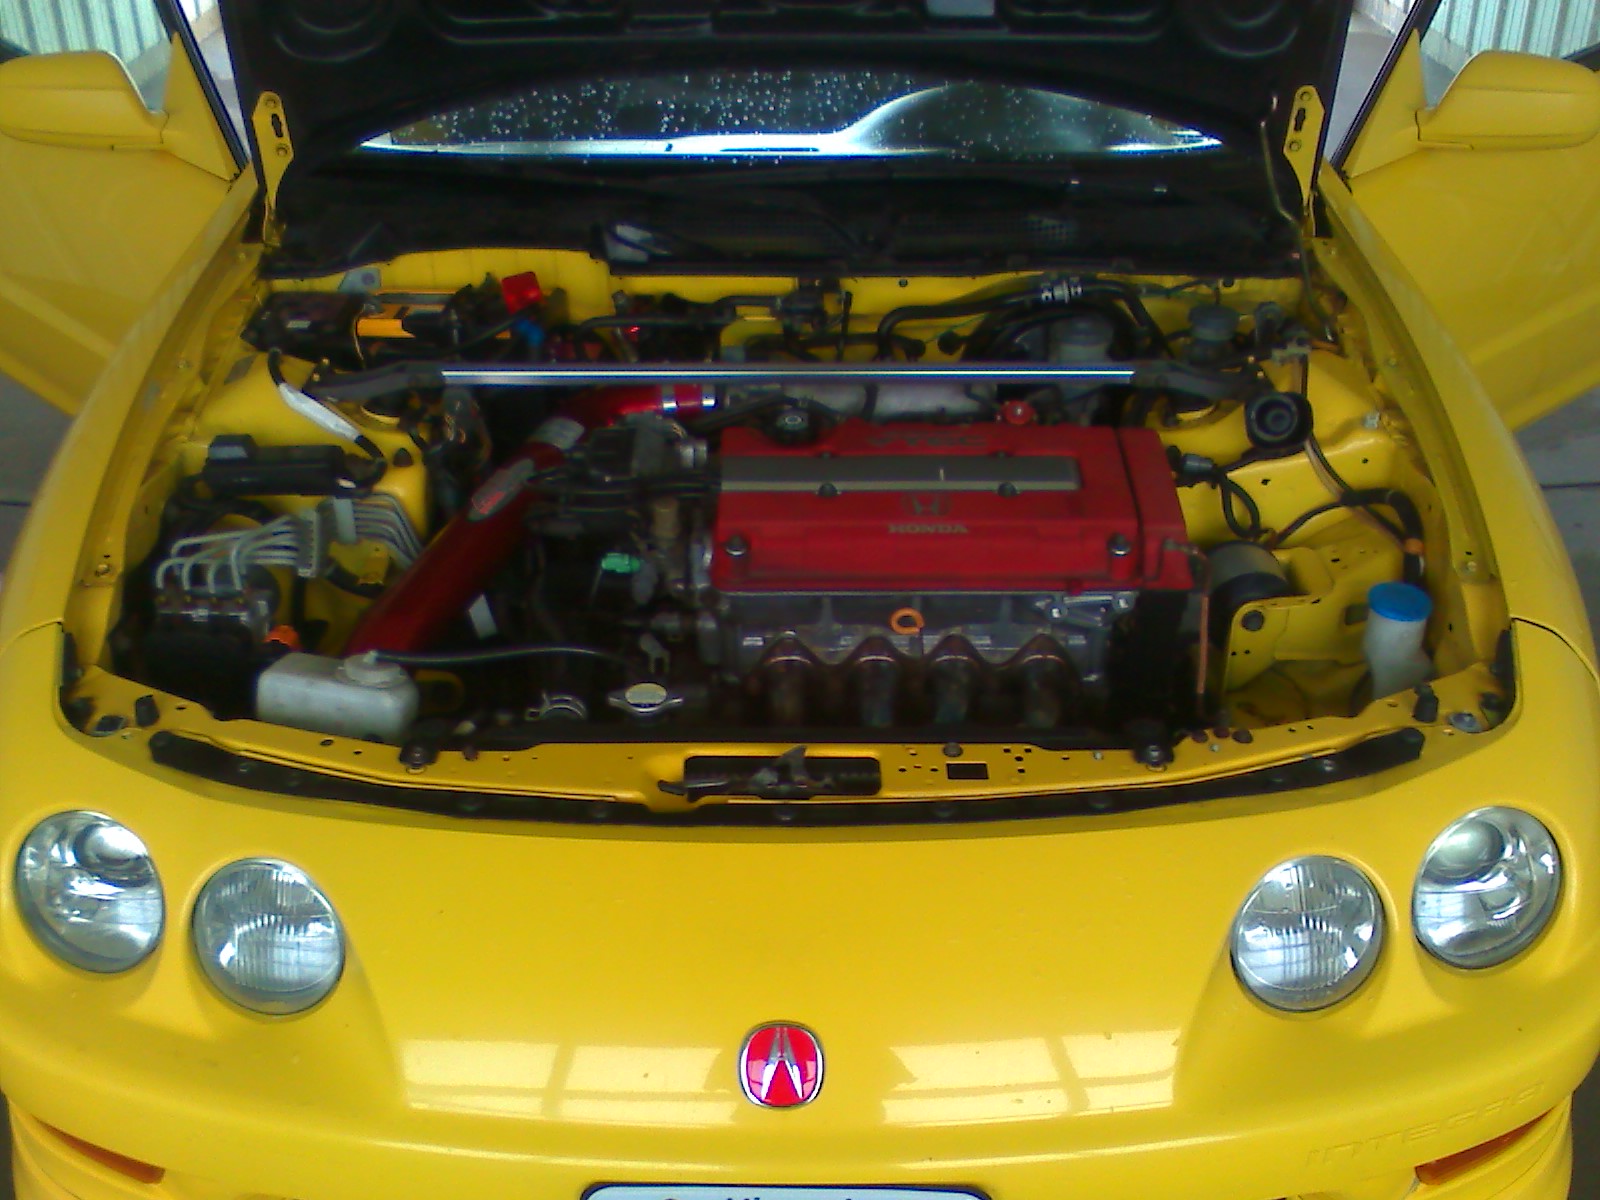  2000 Acura Integra Type R